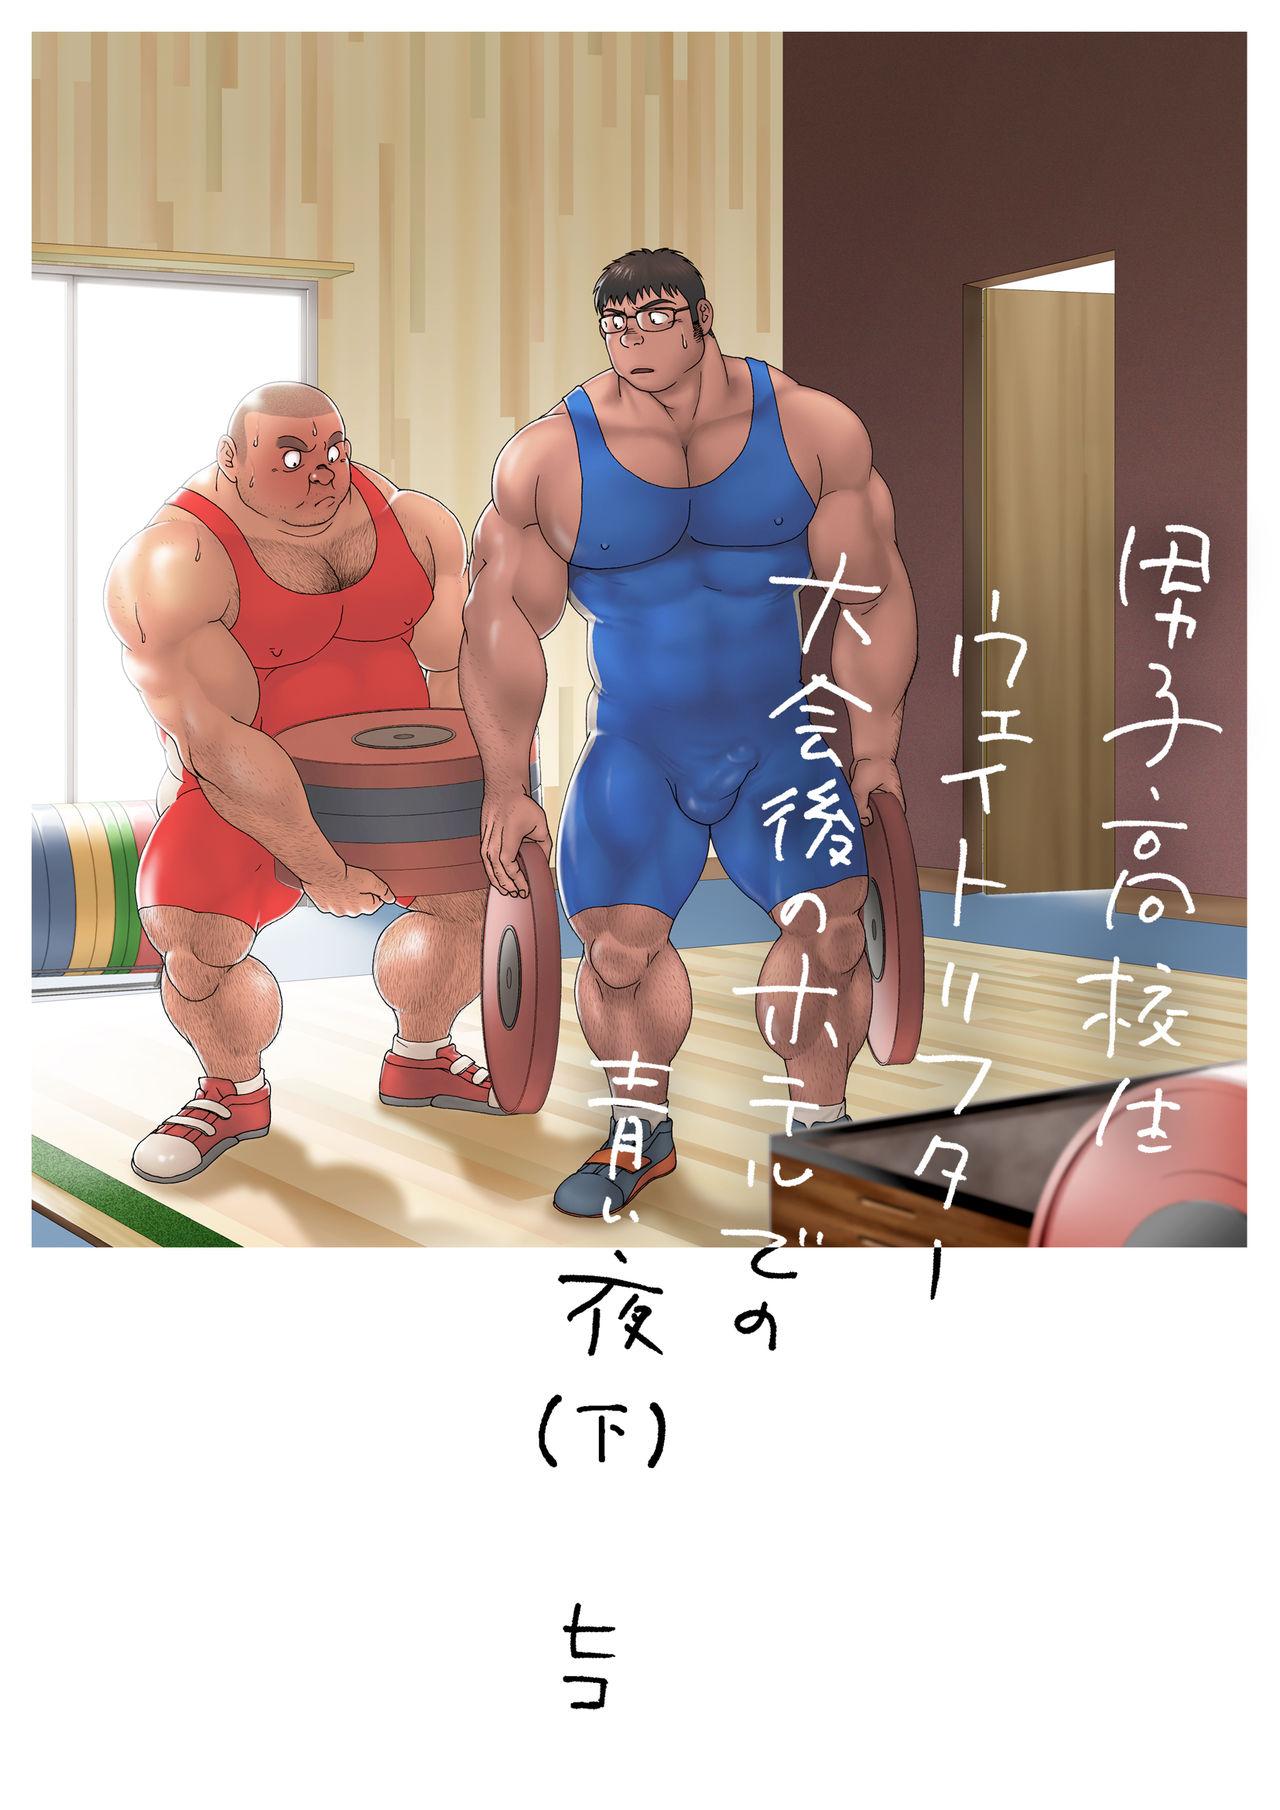 Danshi Koukousei Weightlifter Taikai-go no Hotel de no Aoi Yoru 33